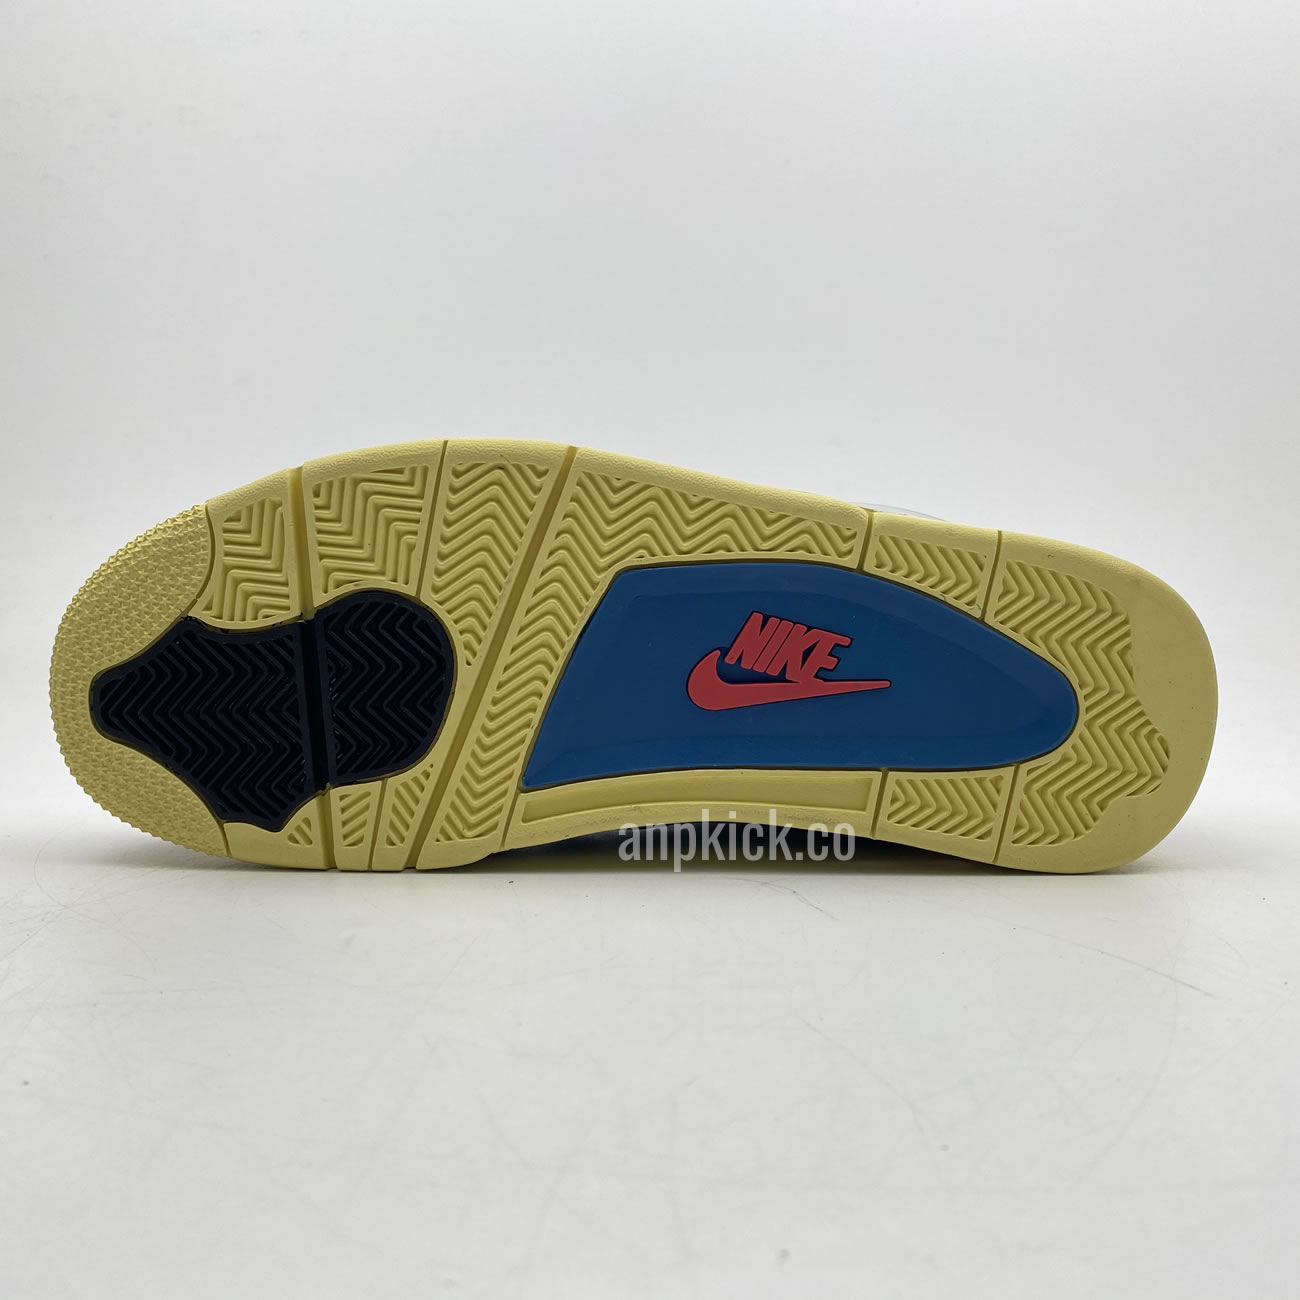 Nike x Union Air Jordan 4 Retro "Off Noir" DC9533-001 Release Date